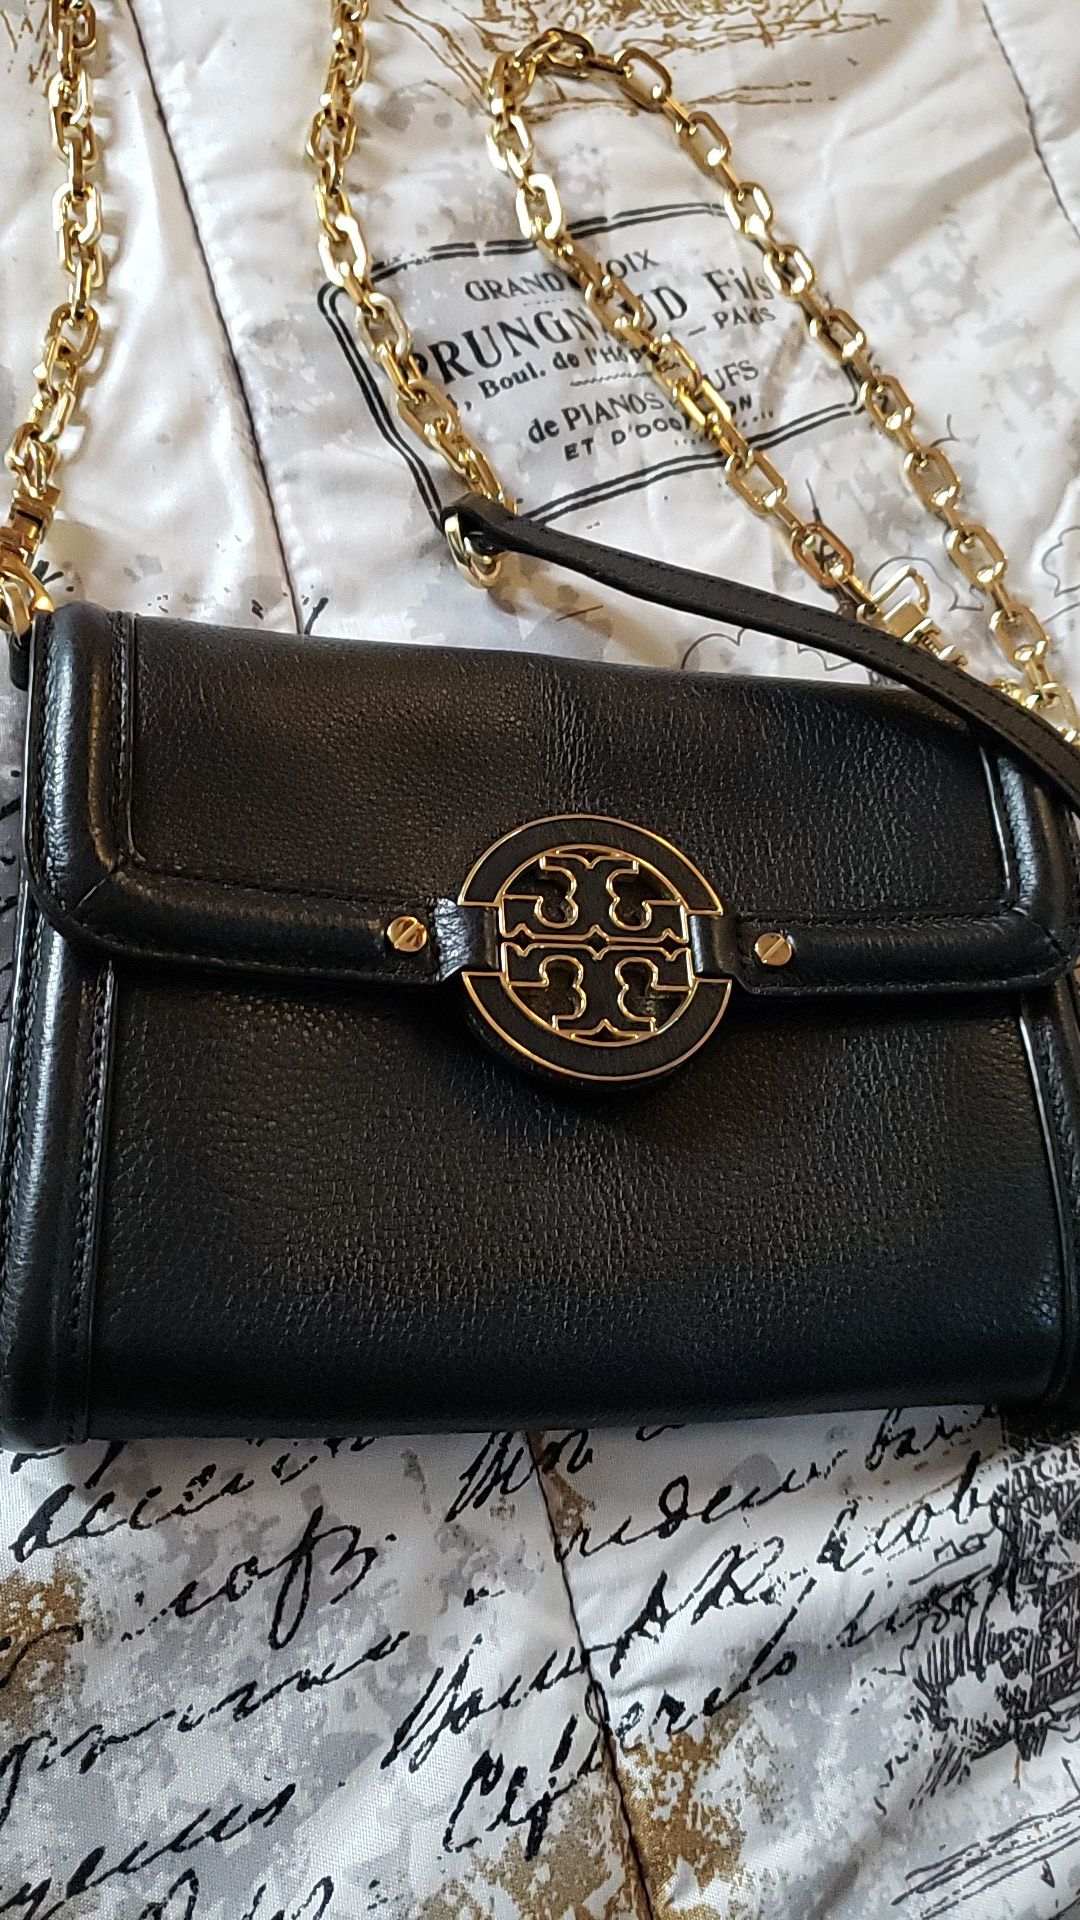 Tory Burch crossbody wallet purse leather